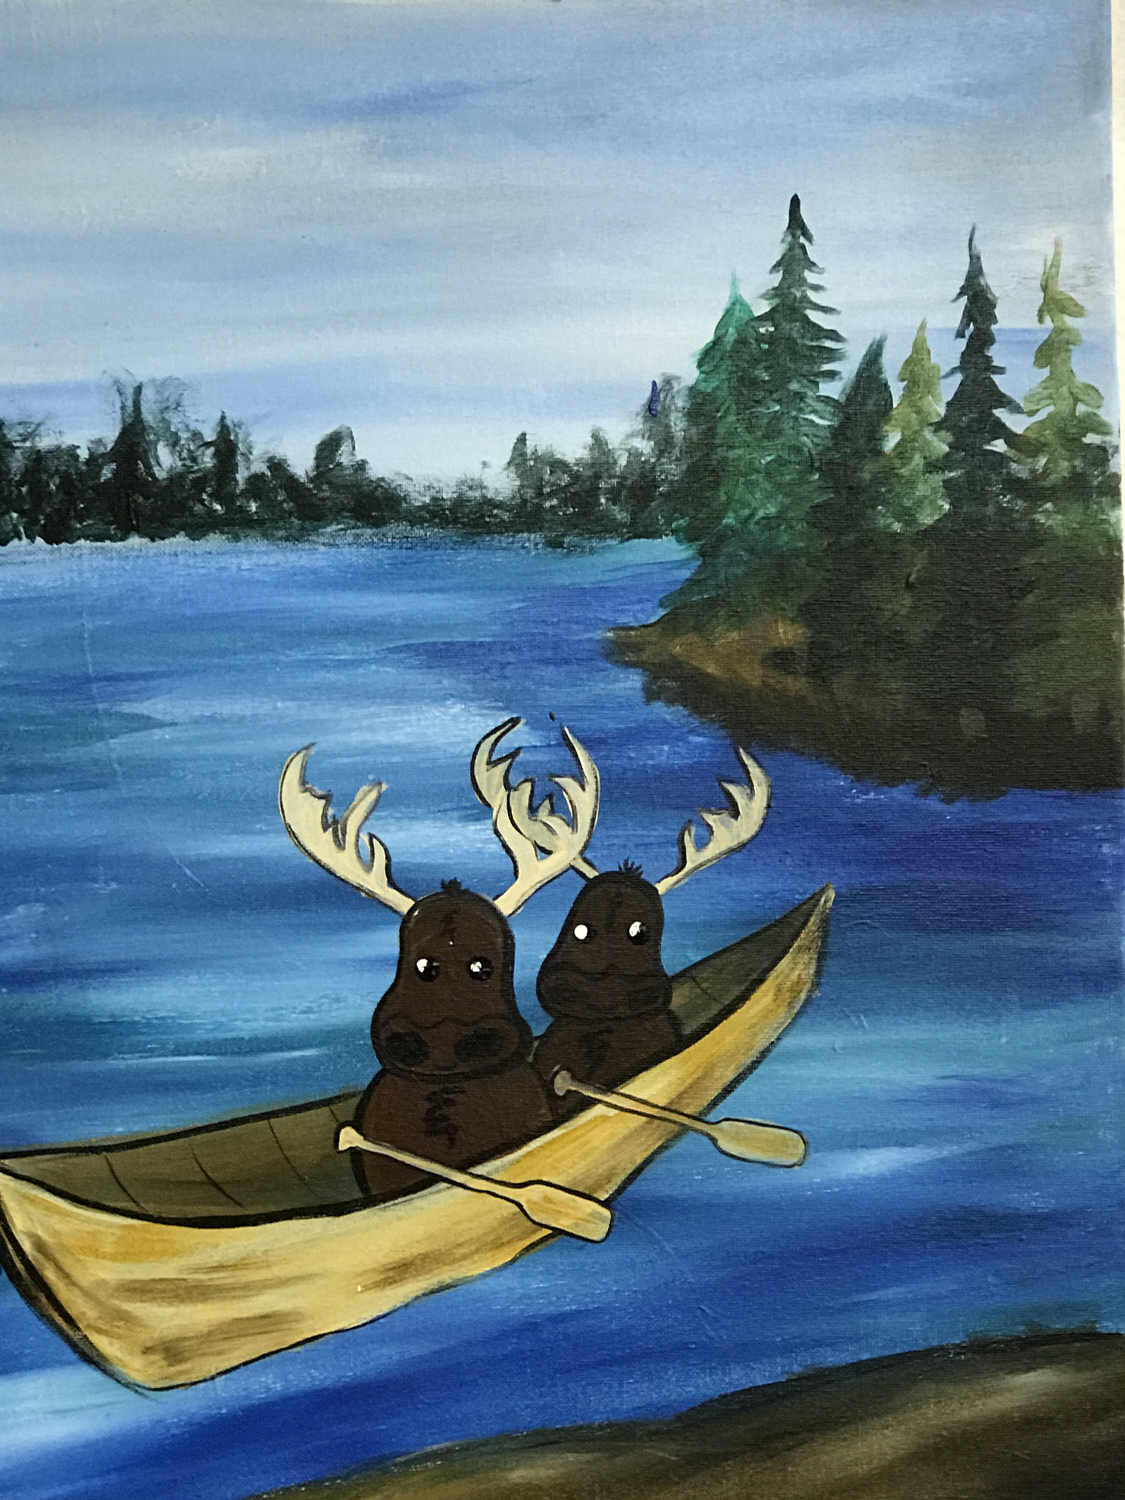 Moose in a Canoe – IT’S A THING!!!